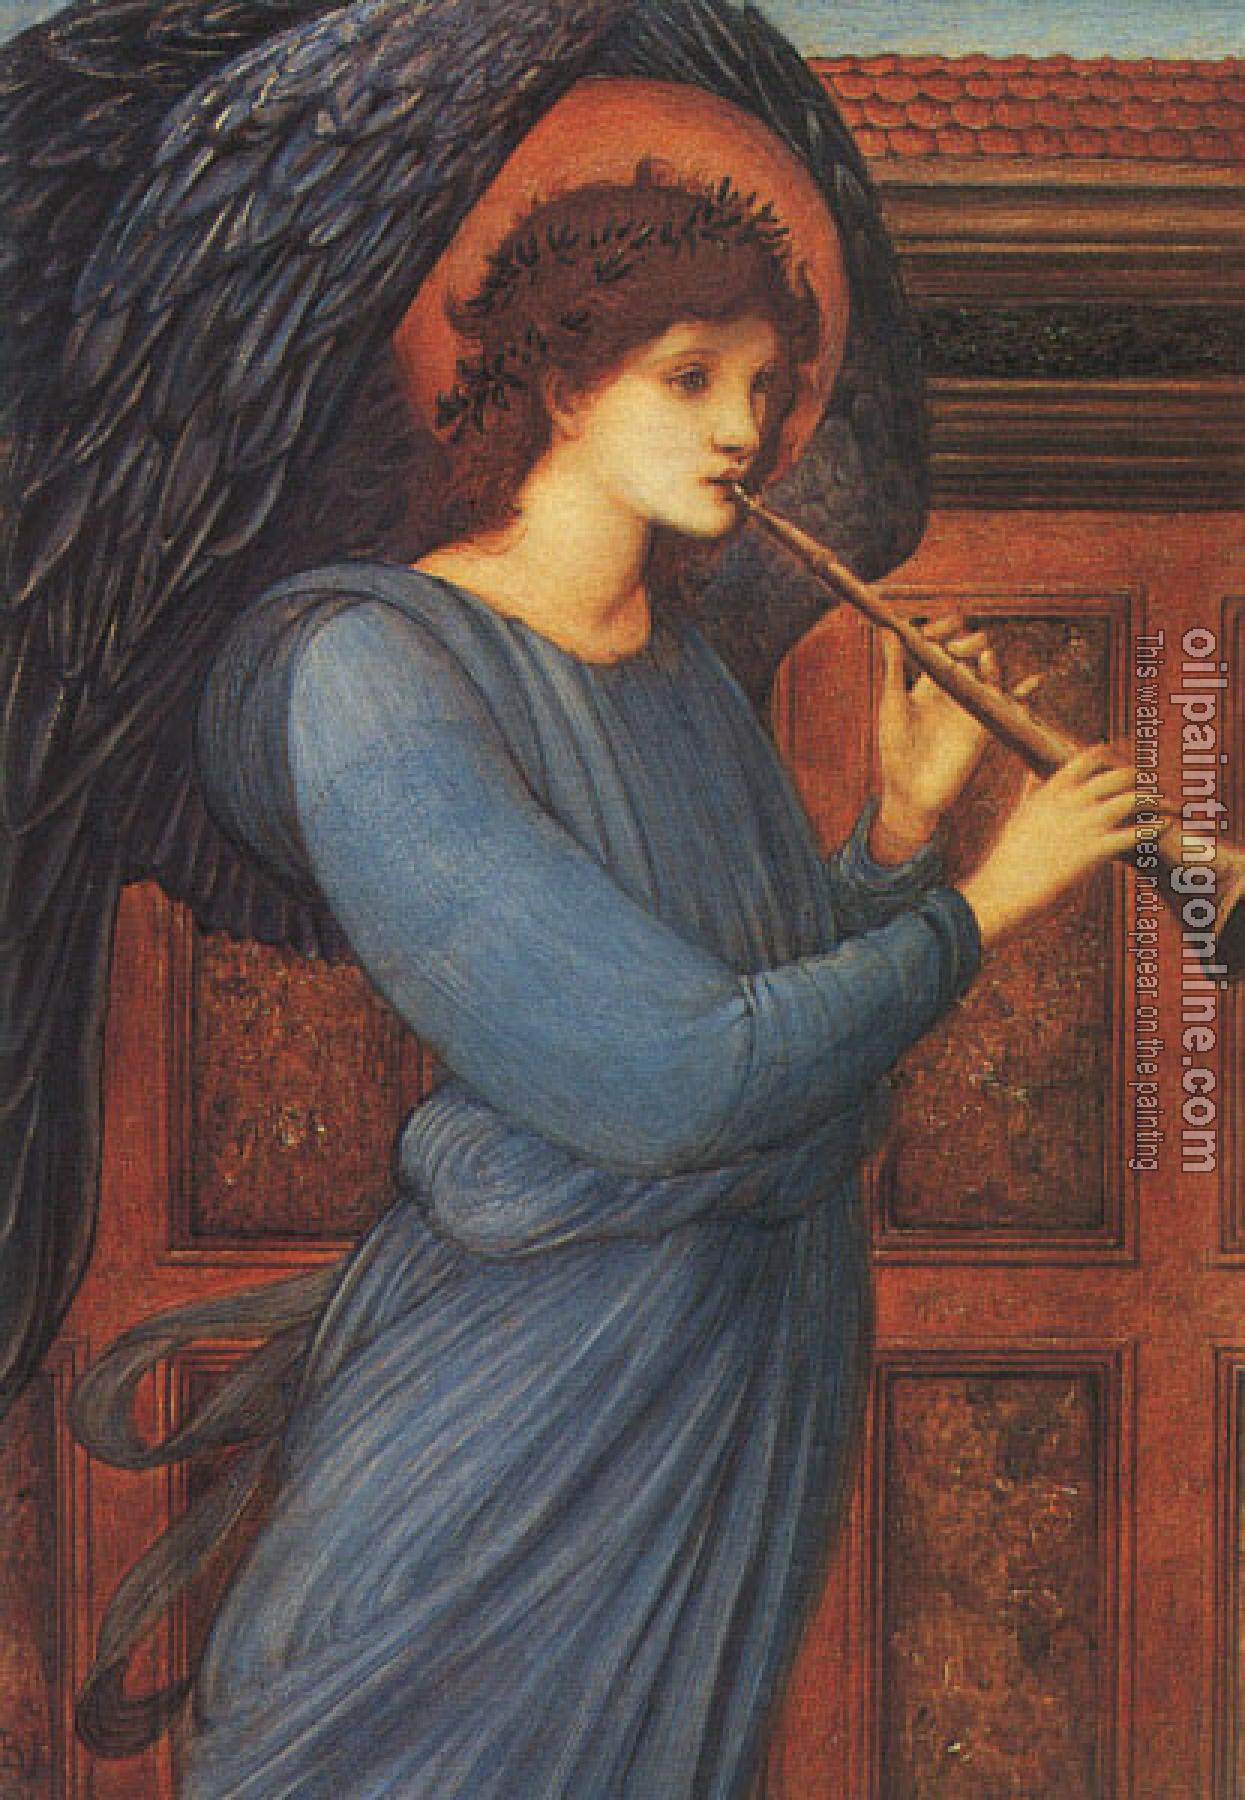 Burne-Jones, Sir Edward Coley - The Angel